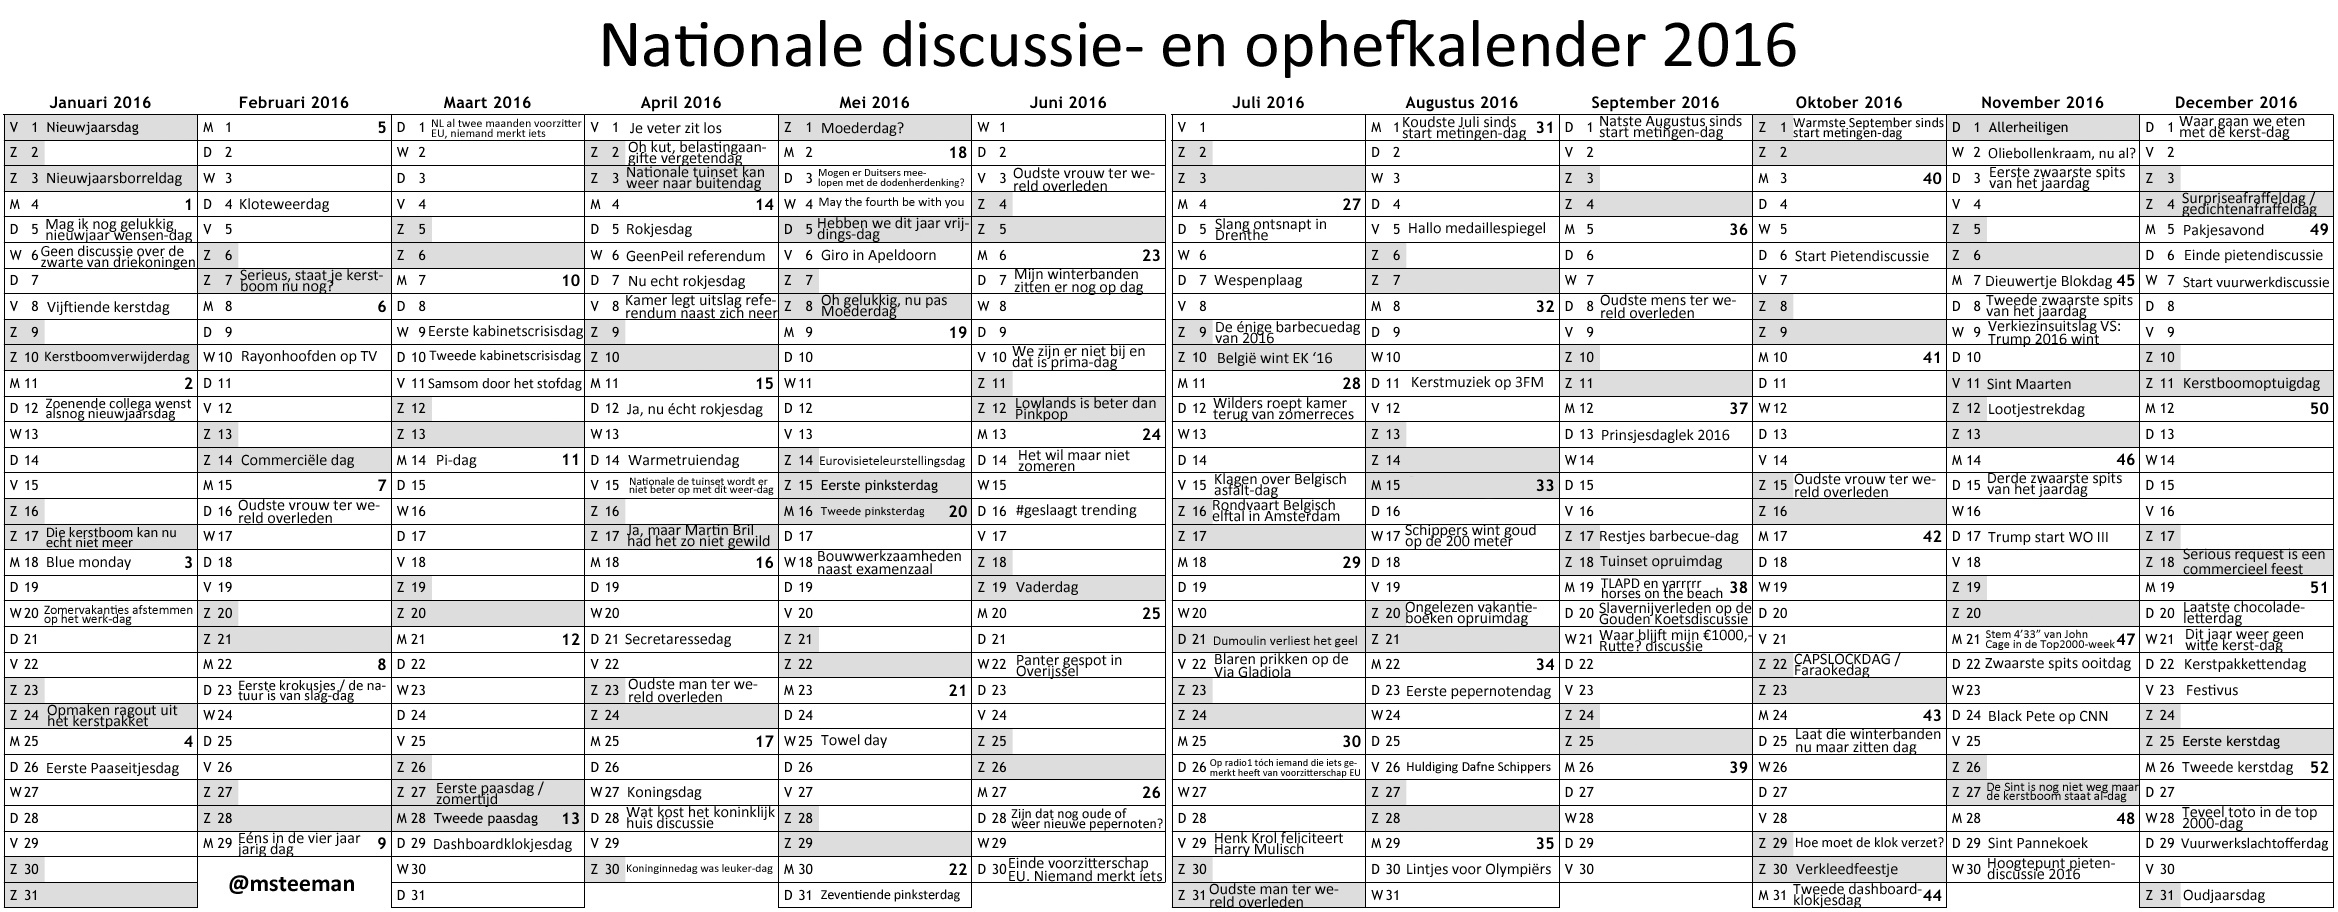 Handel Bulk drempel dumpert.nl - Nationale discussie kalender